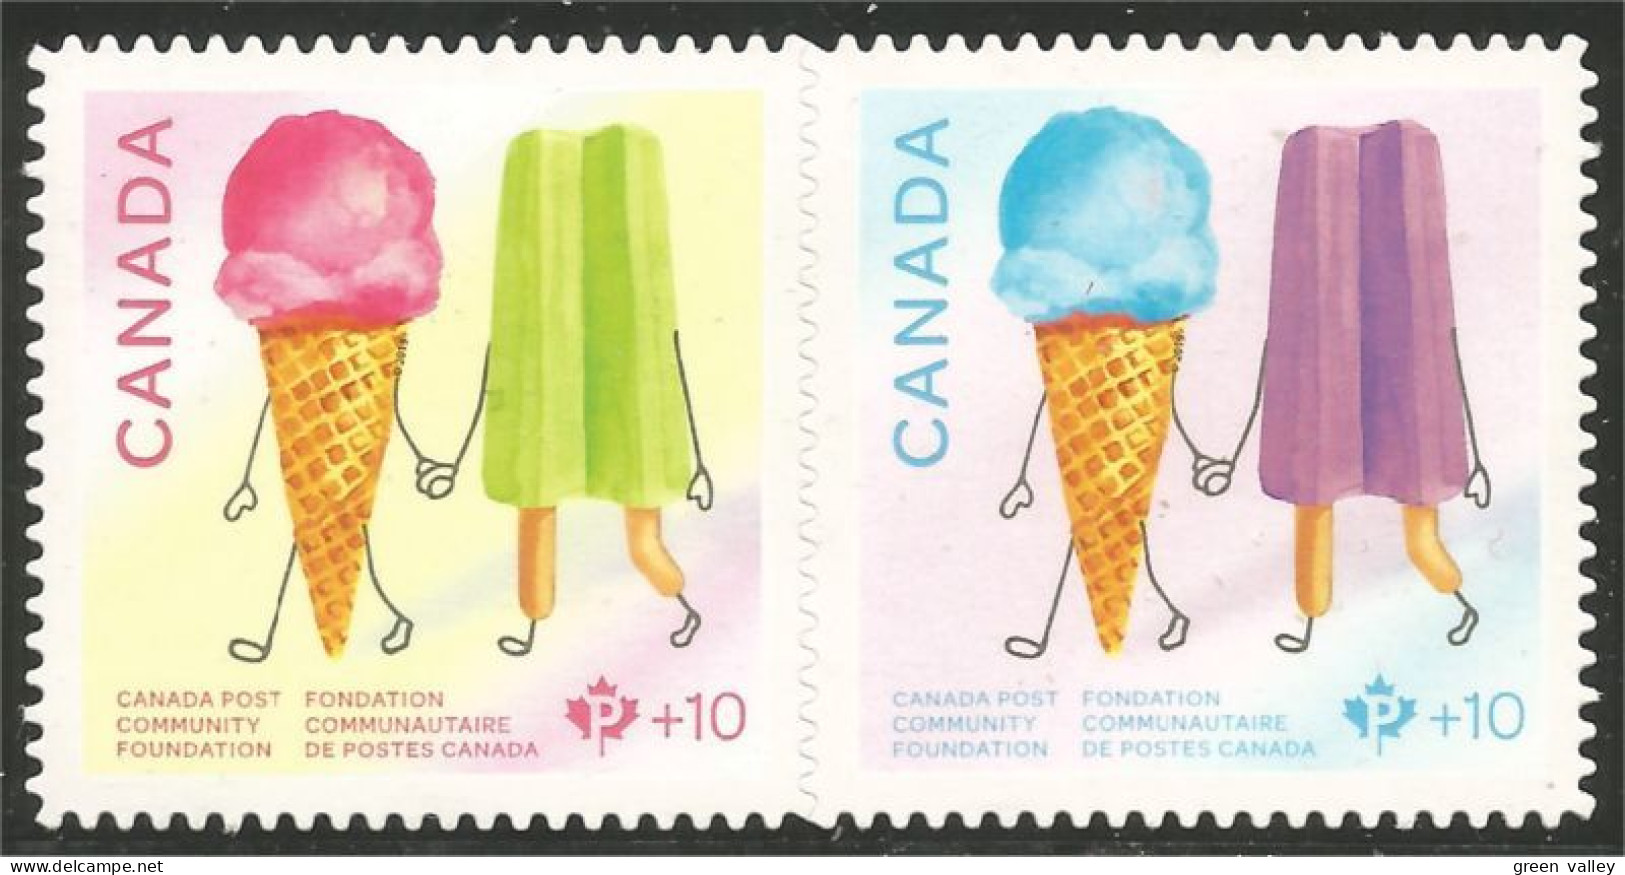 Canada Ice Cream Crème Glacée Glace Gelato Helado Eis Annual Collection Annuelle MNH ** Neuf SC (CB-28-29ia) - Ungebraucht